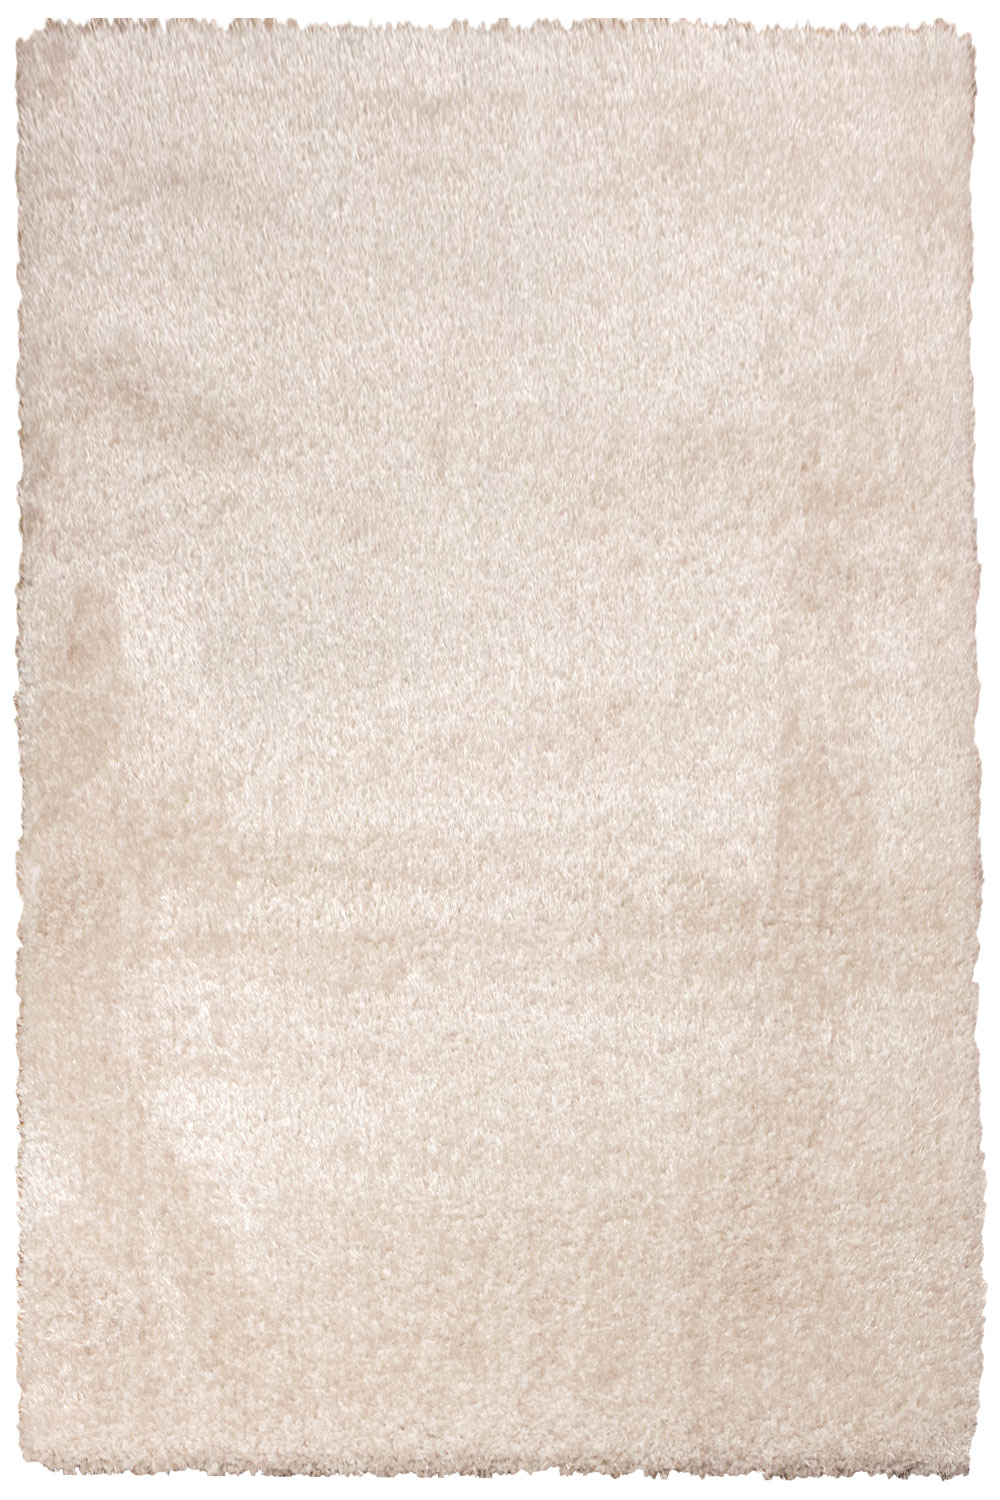 Kusový koberec PUFFY Beige 120x180 cm